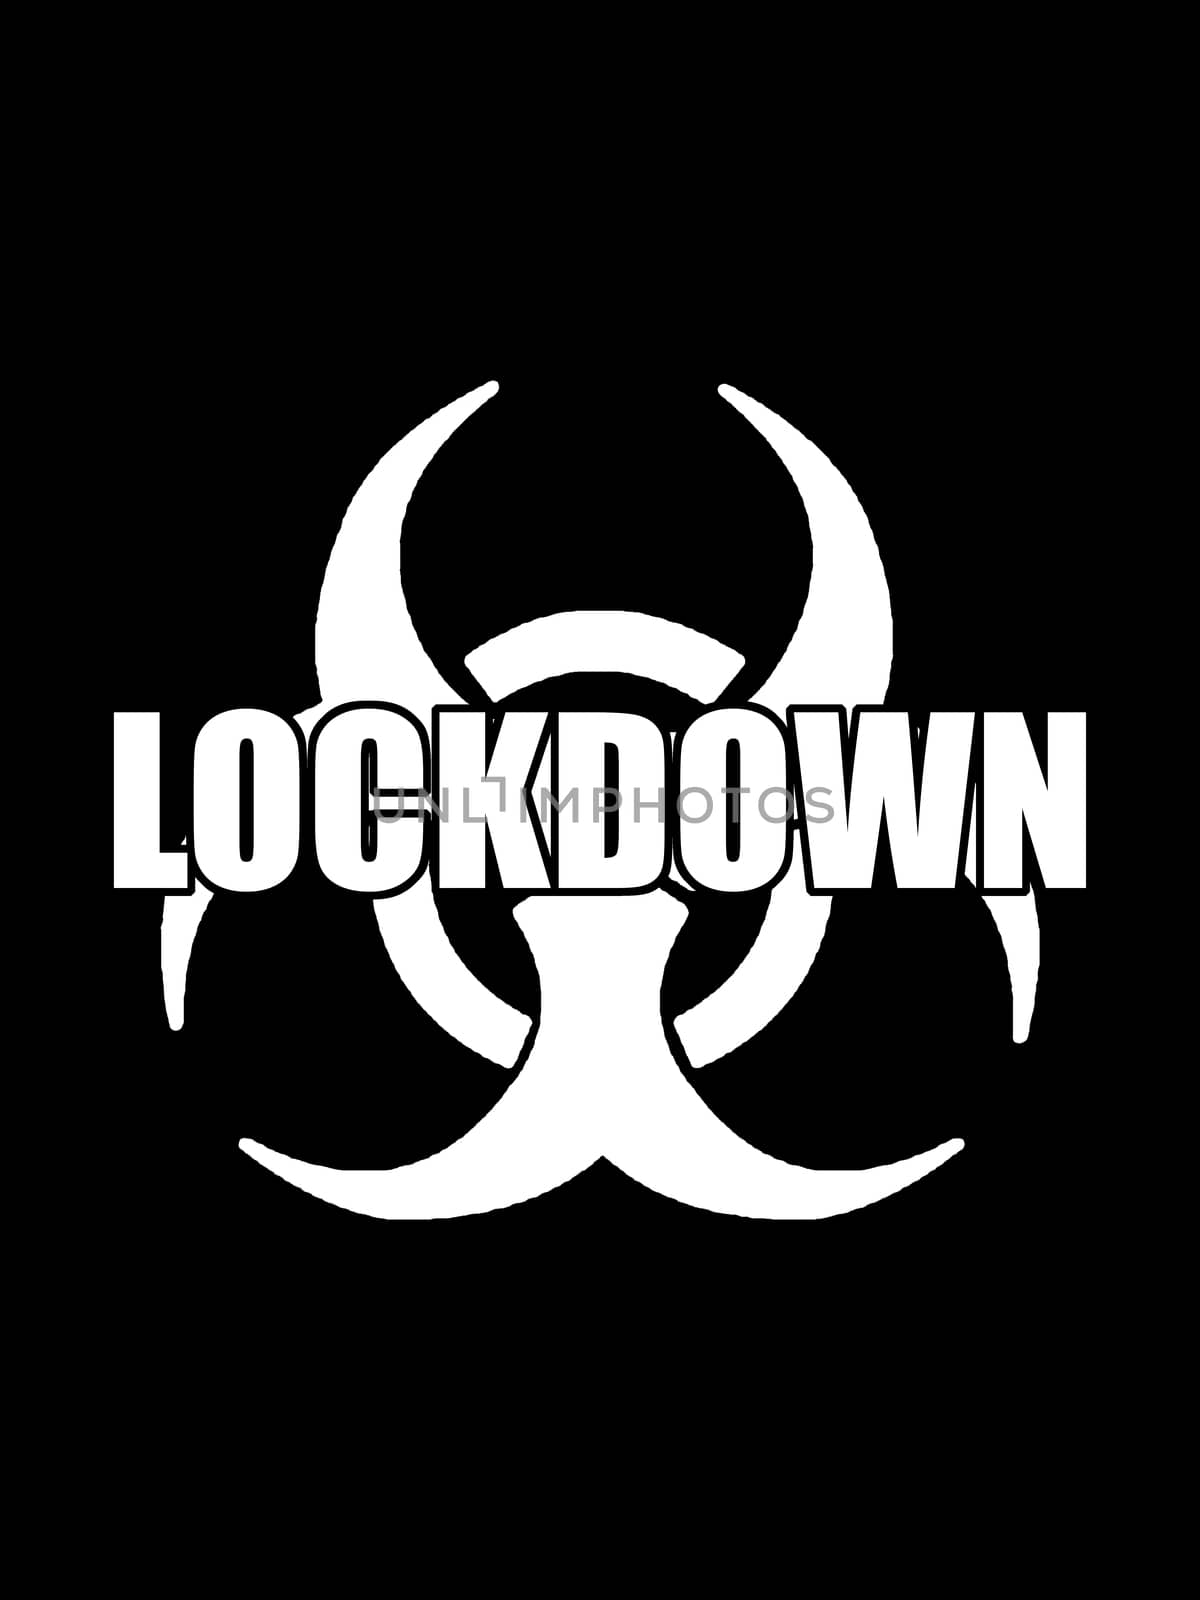 Lockdown by Bigalbaloo